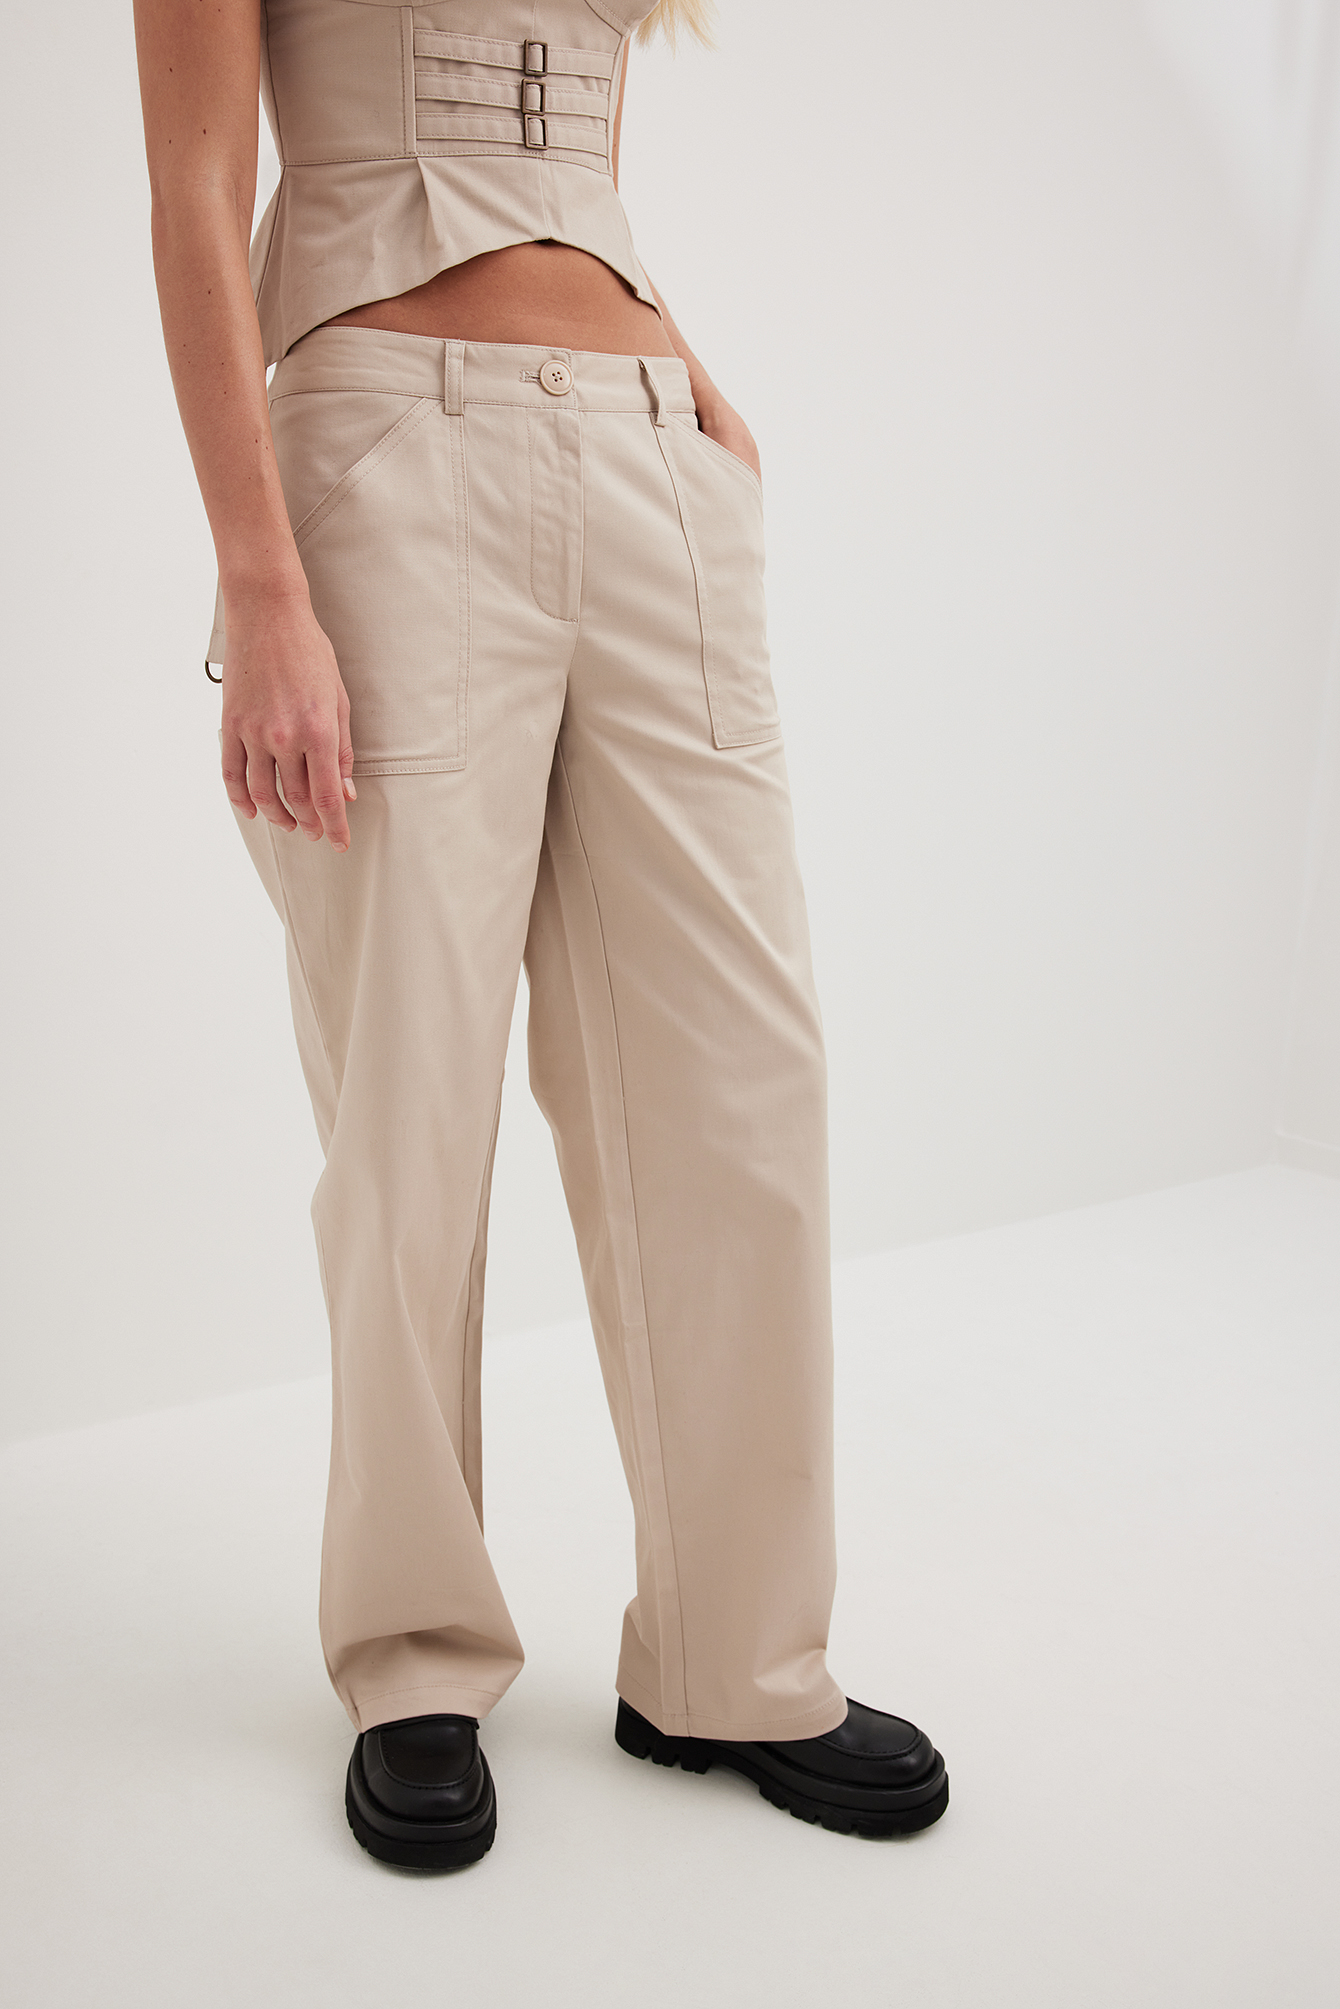 Toteme Women's Beige Cotton Mid-rise Straight Drawstring Cargo Trousers |  eBay